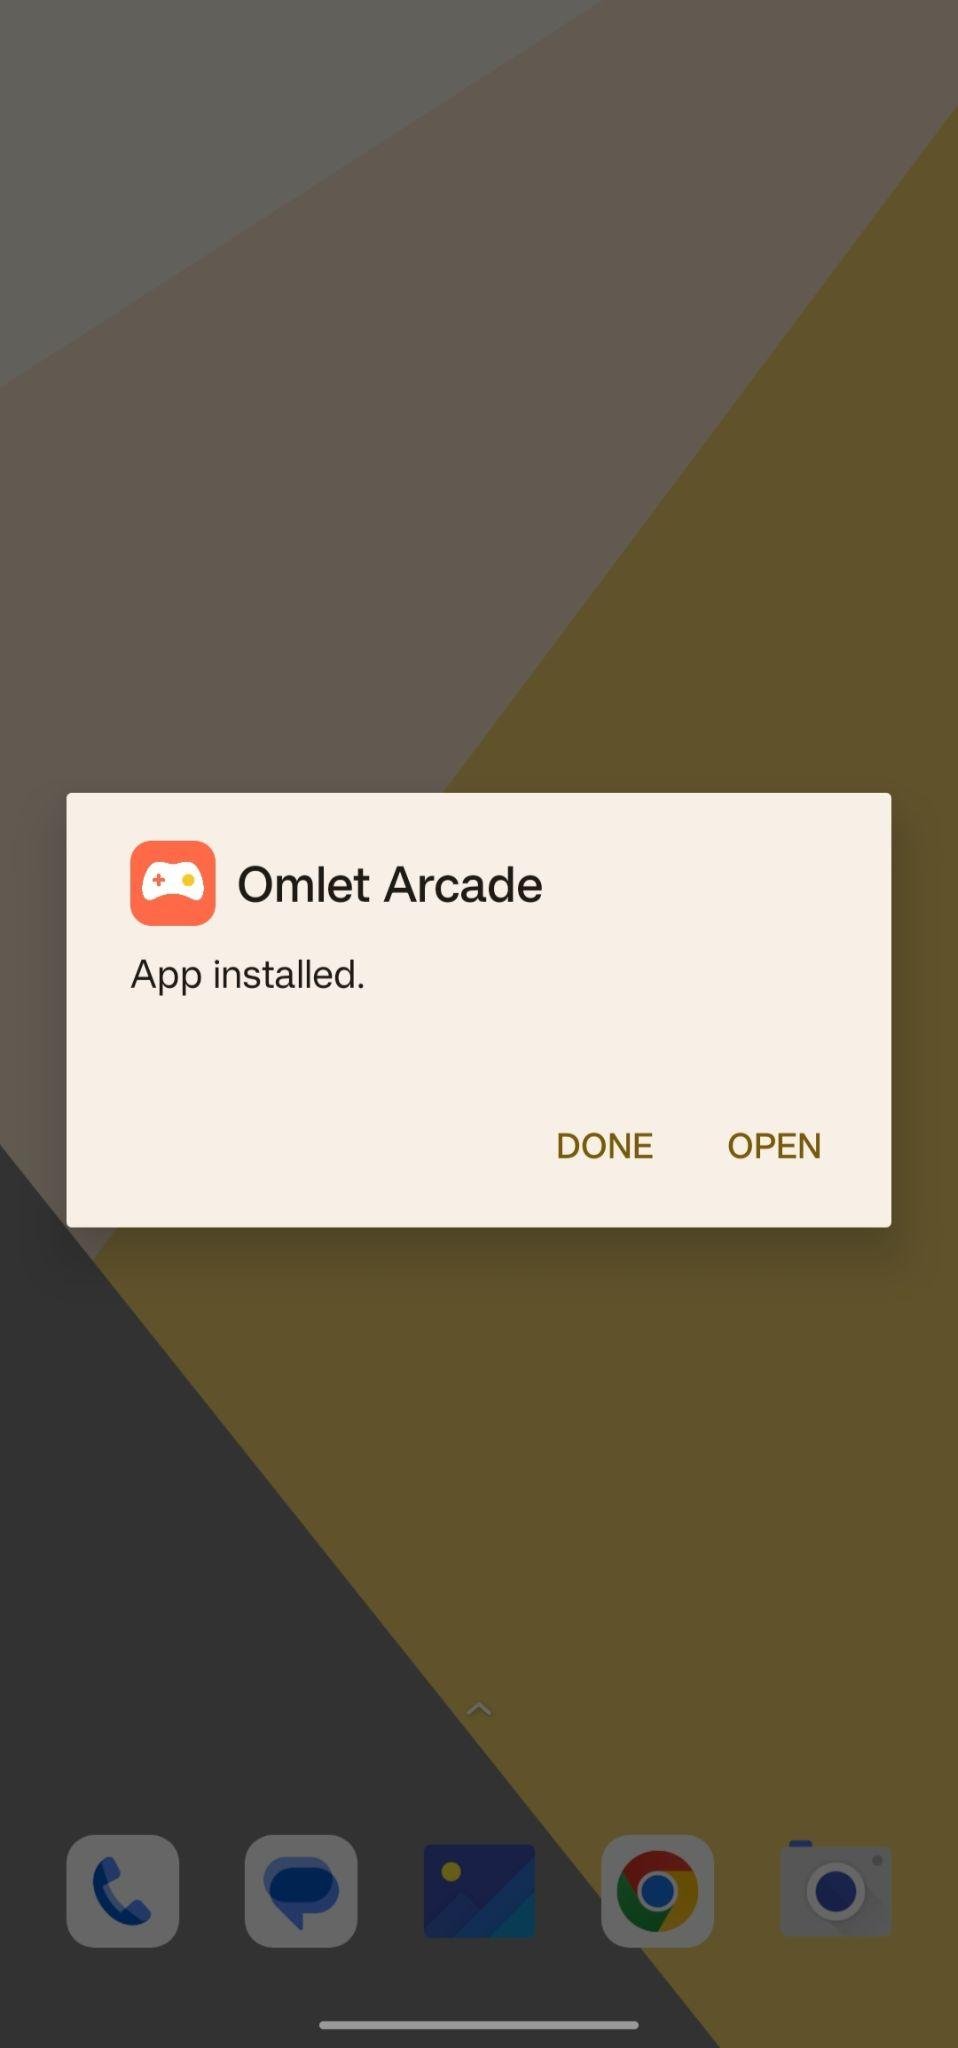 Omlet Arcade apk installed